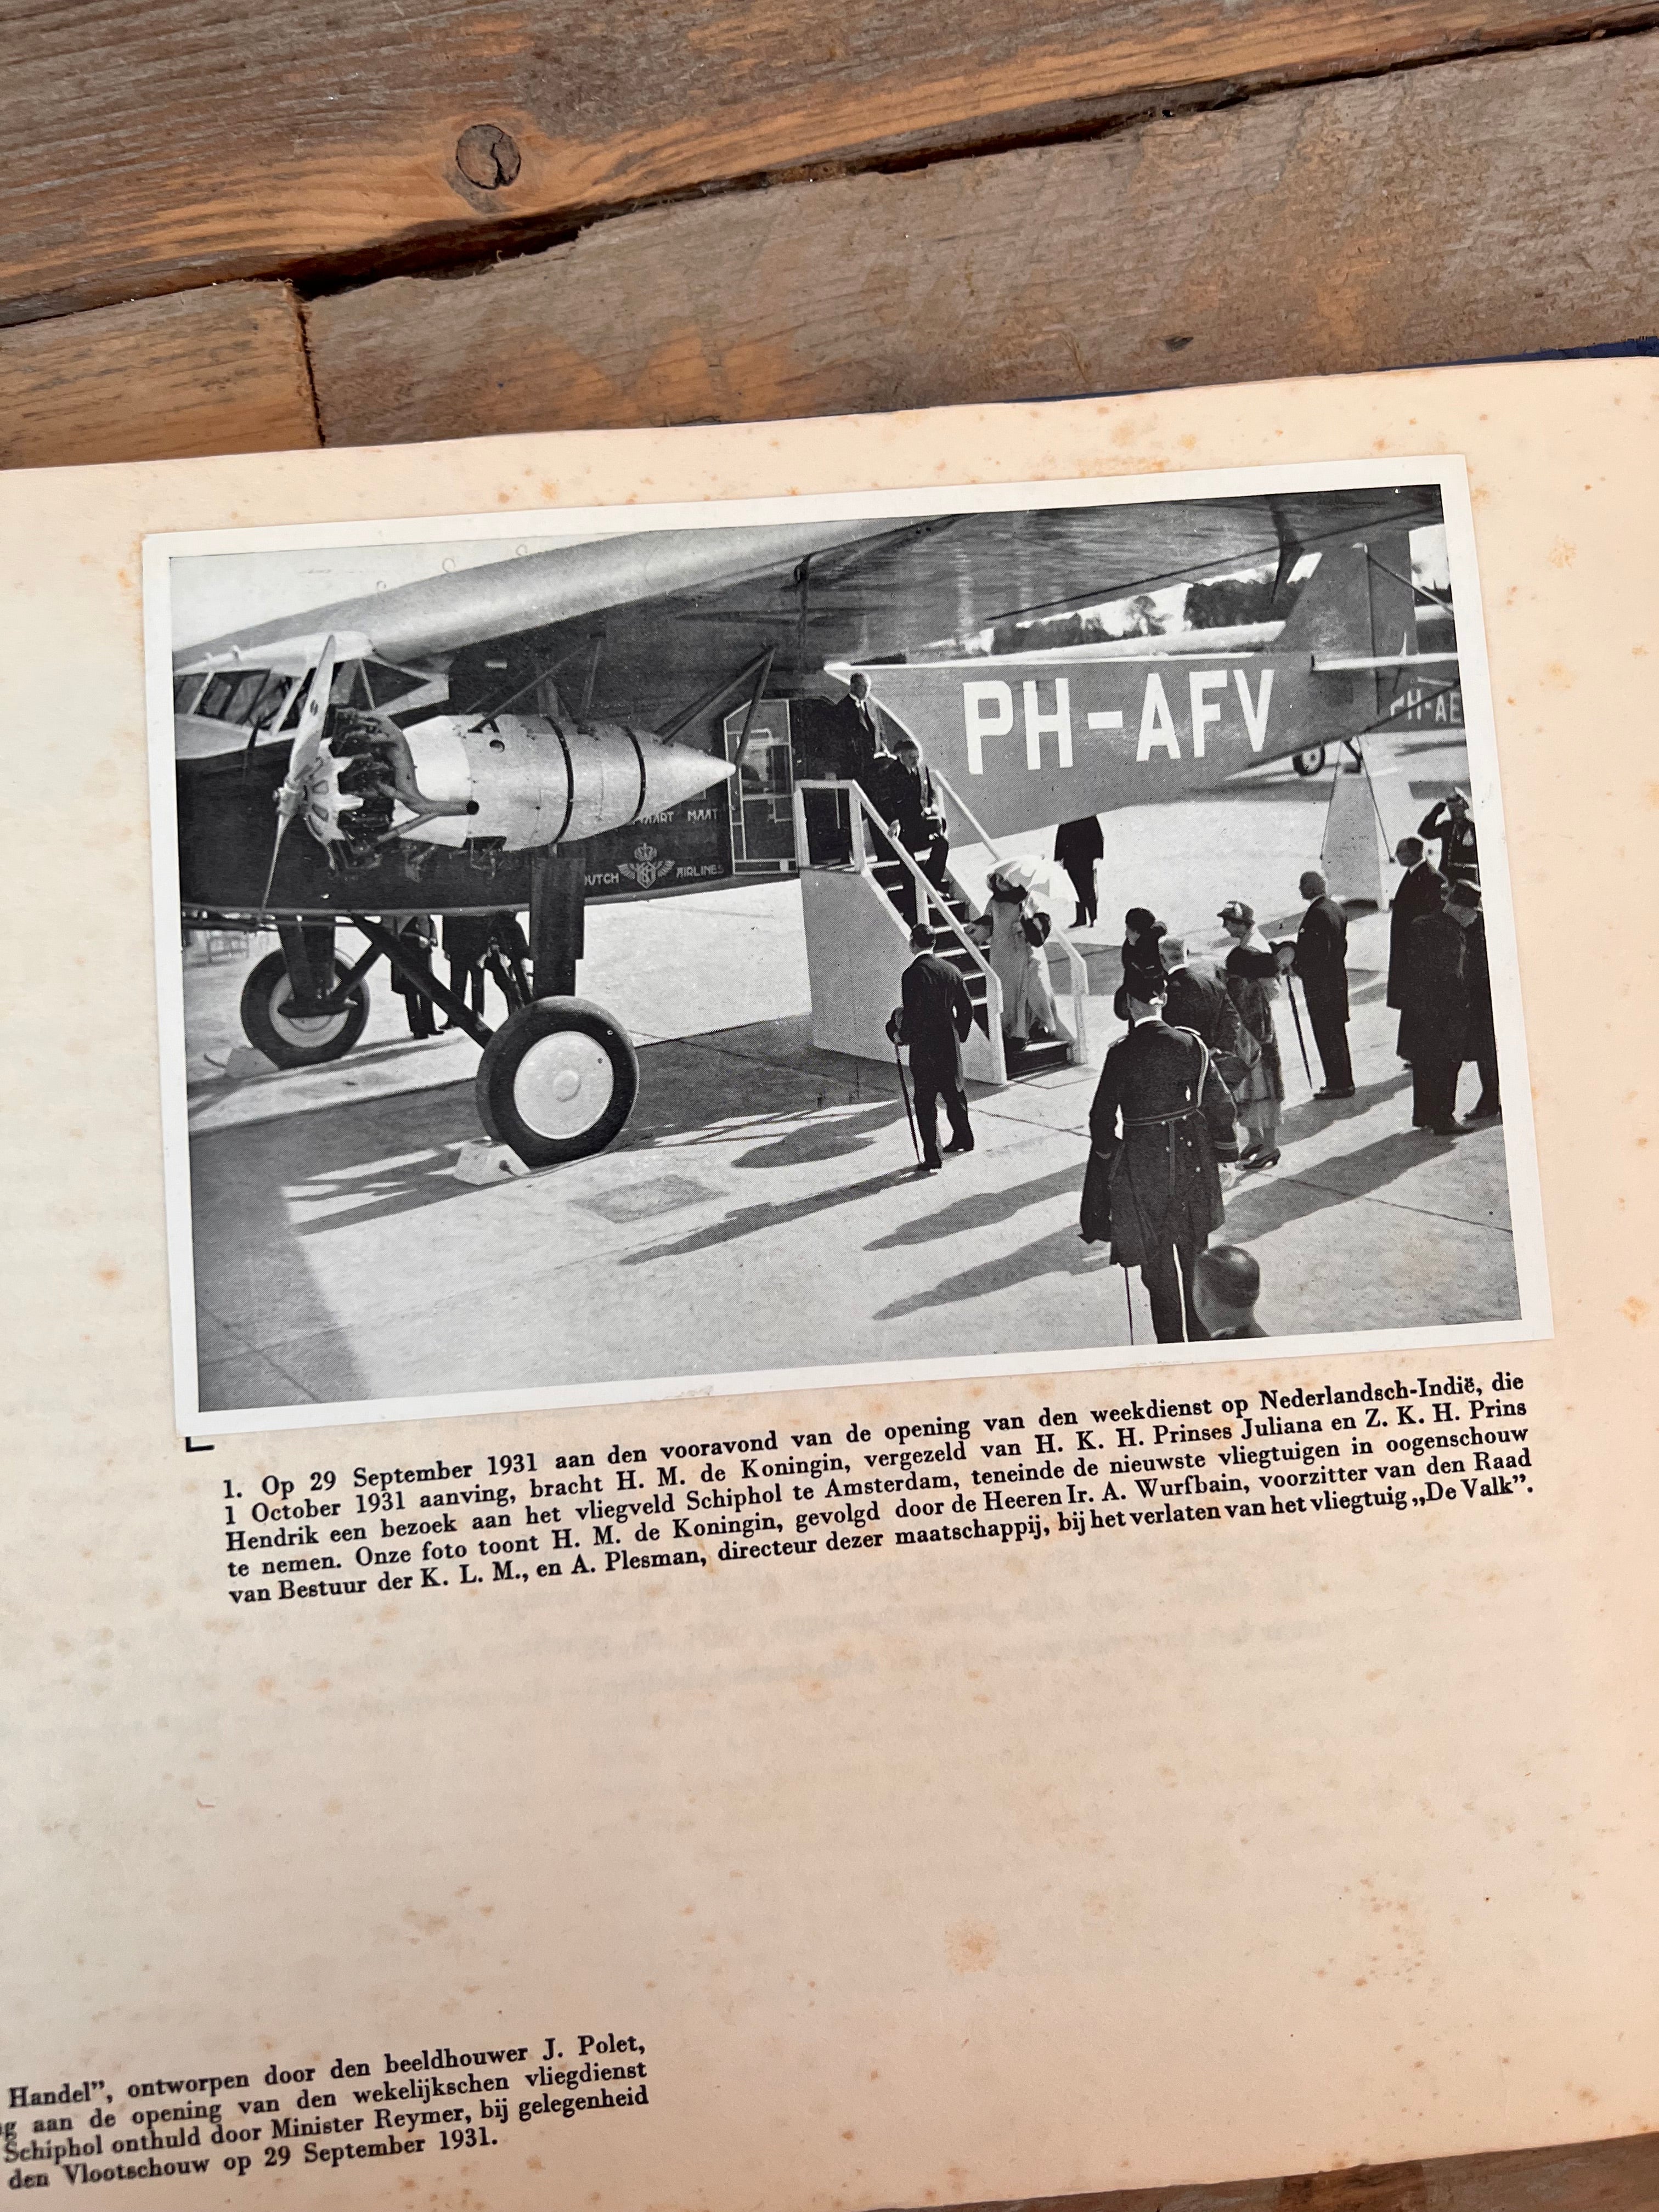 The Flying Dutchman KLM 1930s